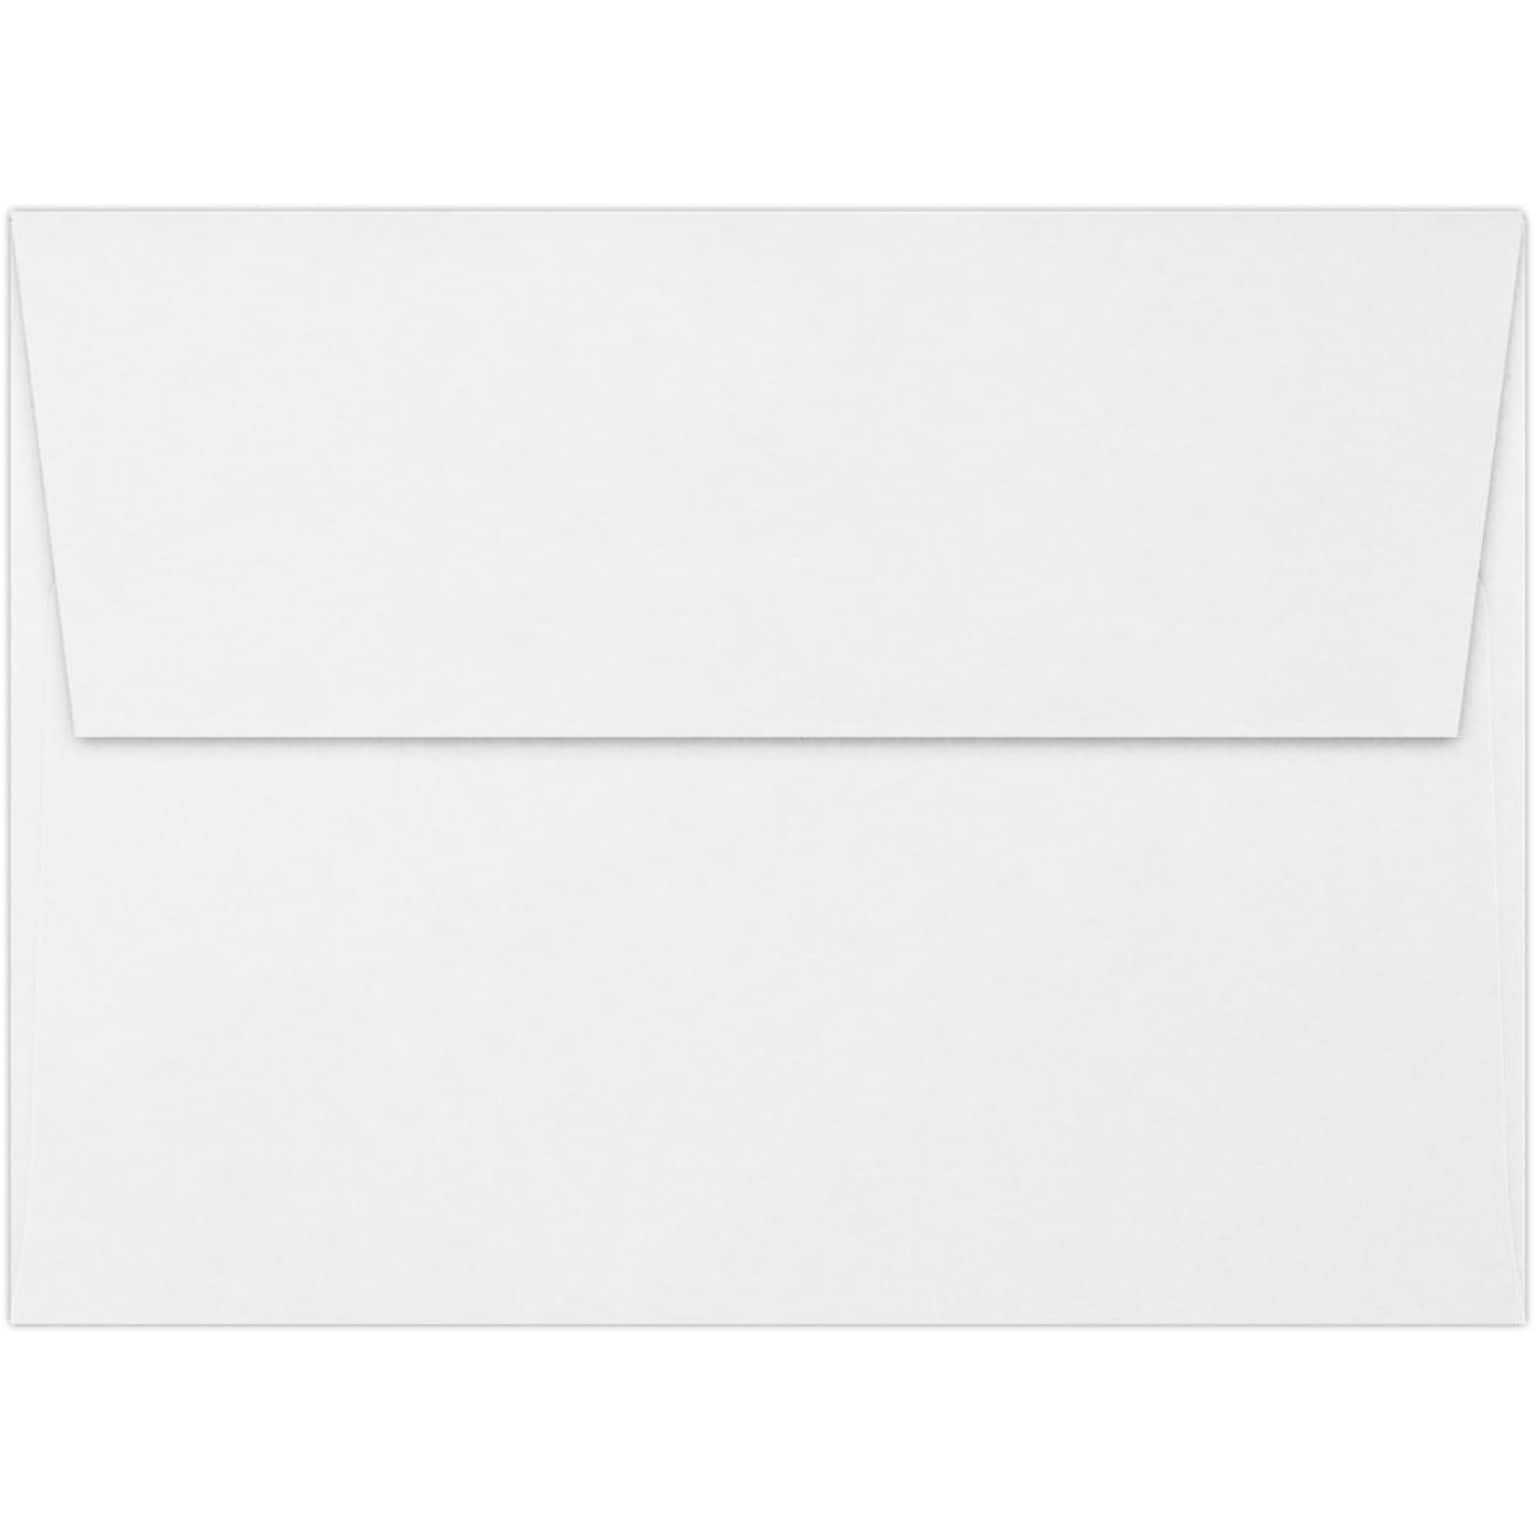 LUX A7 Invitation Envelopes (5 1/4 x 7 1/4) 1000/Pack, 70lb. Classic Linen® Solar White (880-70SWLI-1000)